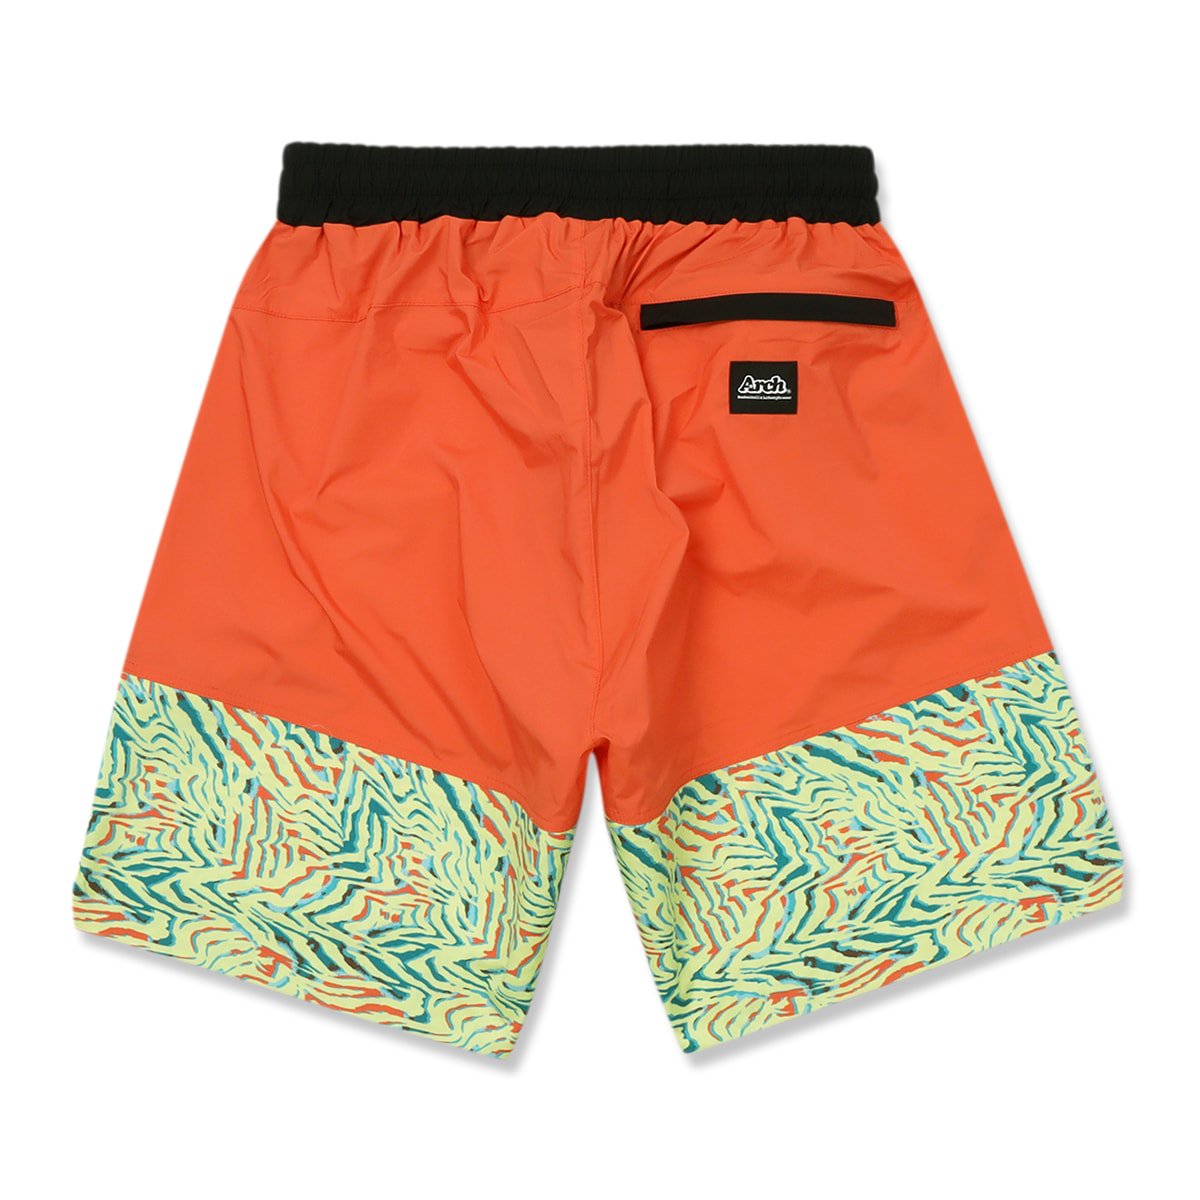 zebra section shorts【orange】 - Arch ☆ アーチ [バスケットボール 